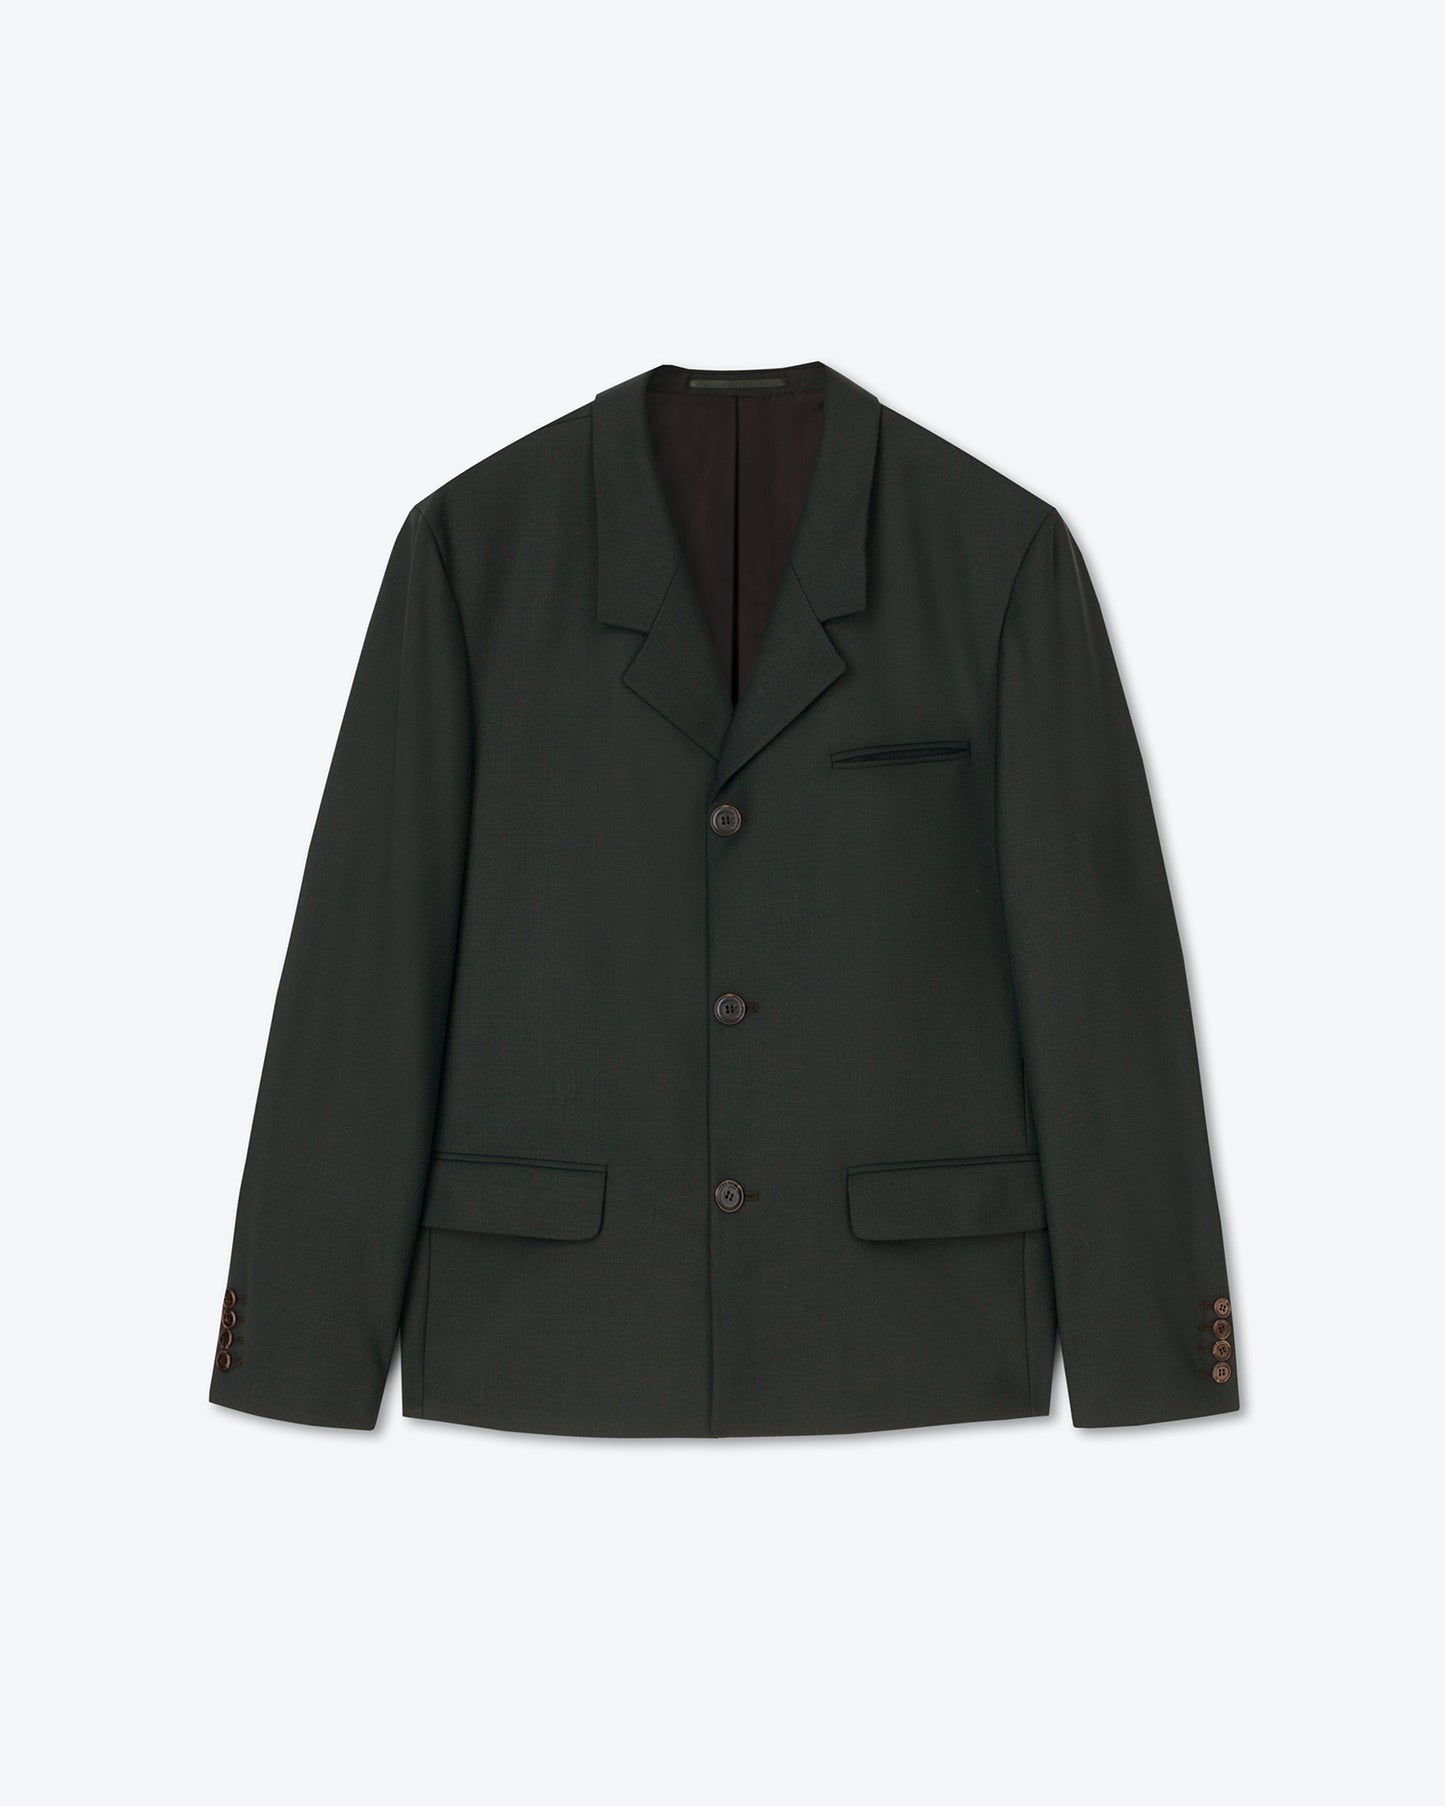 Rox - Ecovero™️ Suit Jacket - Pine Green